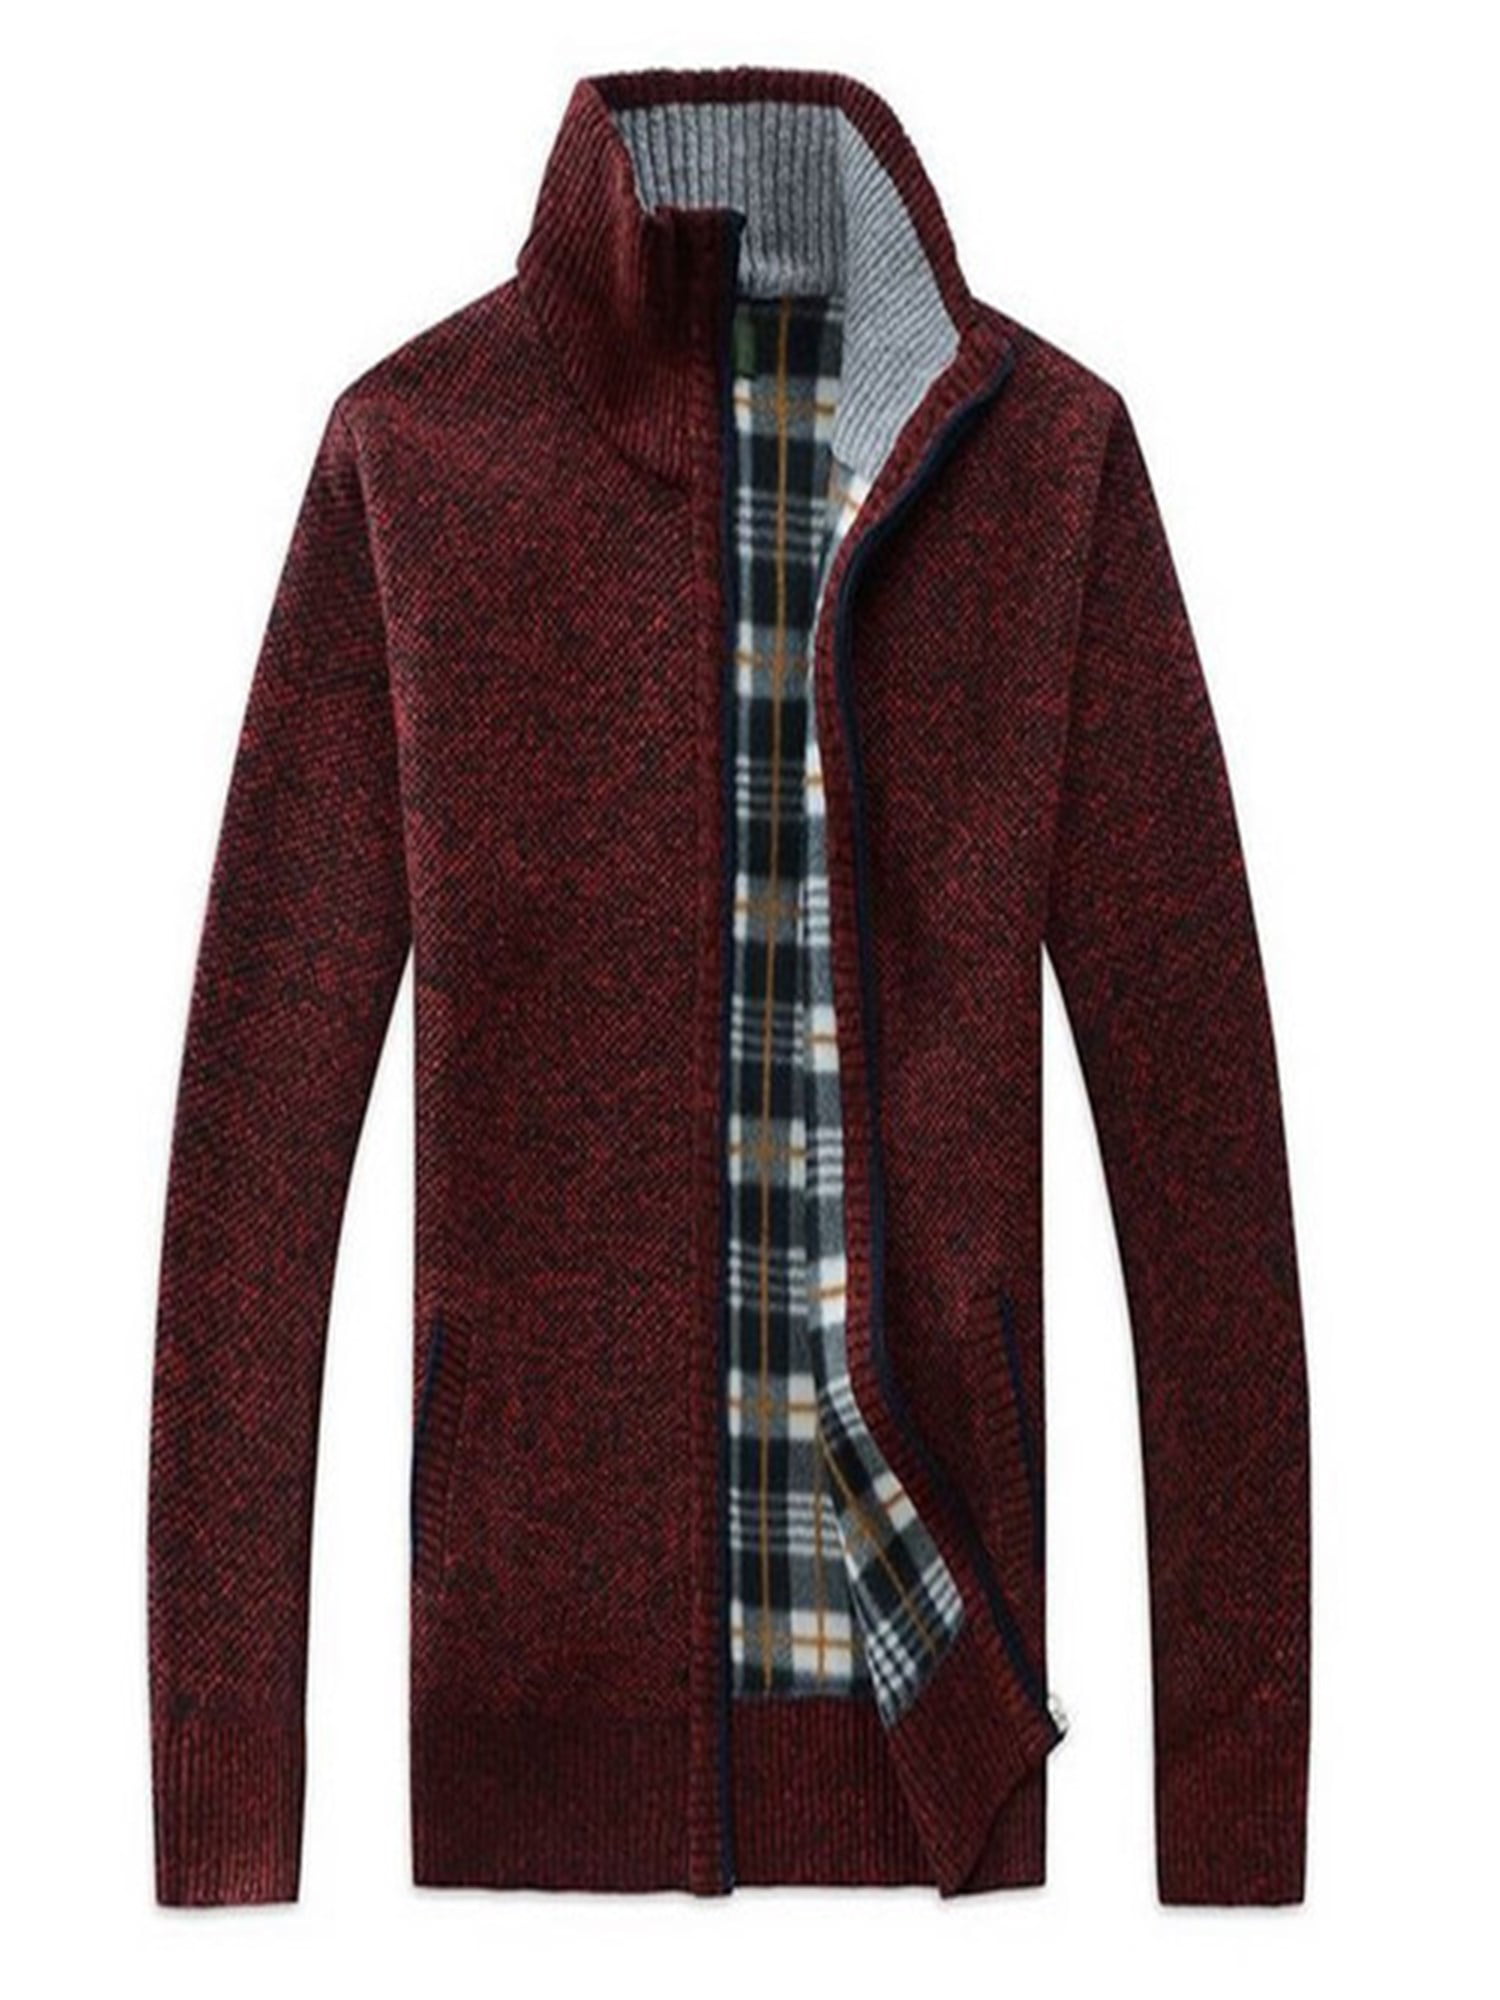 New Mens Winter Warm Slim Sweater Knitted Cardigan Jumper Zip Fleece Lined Coat